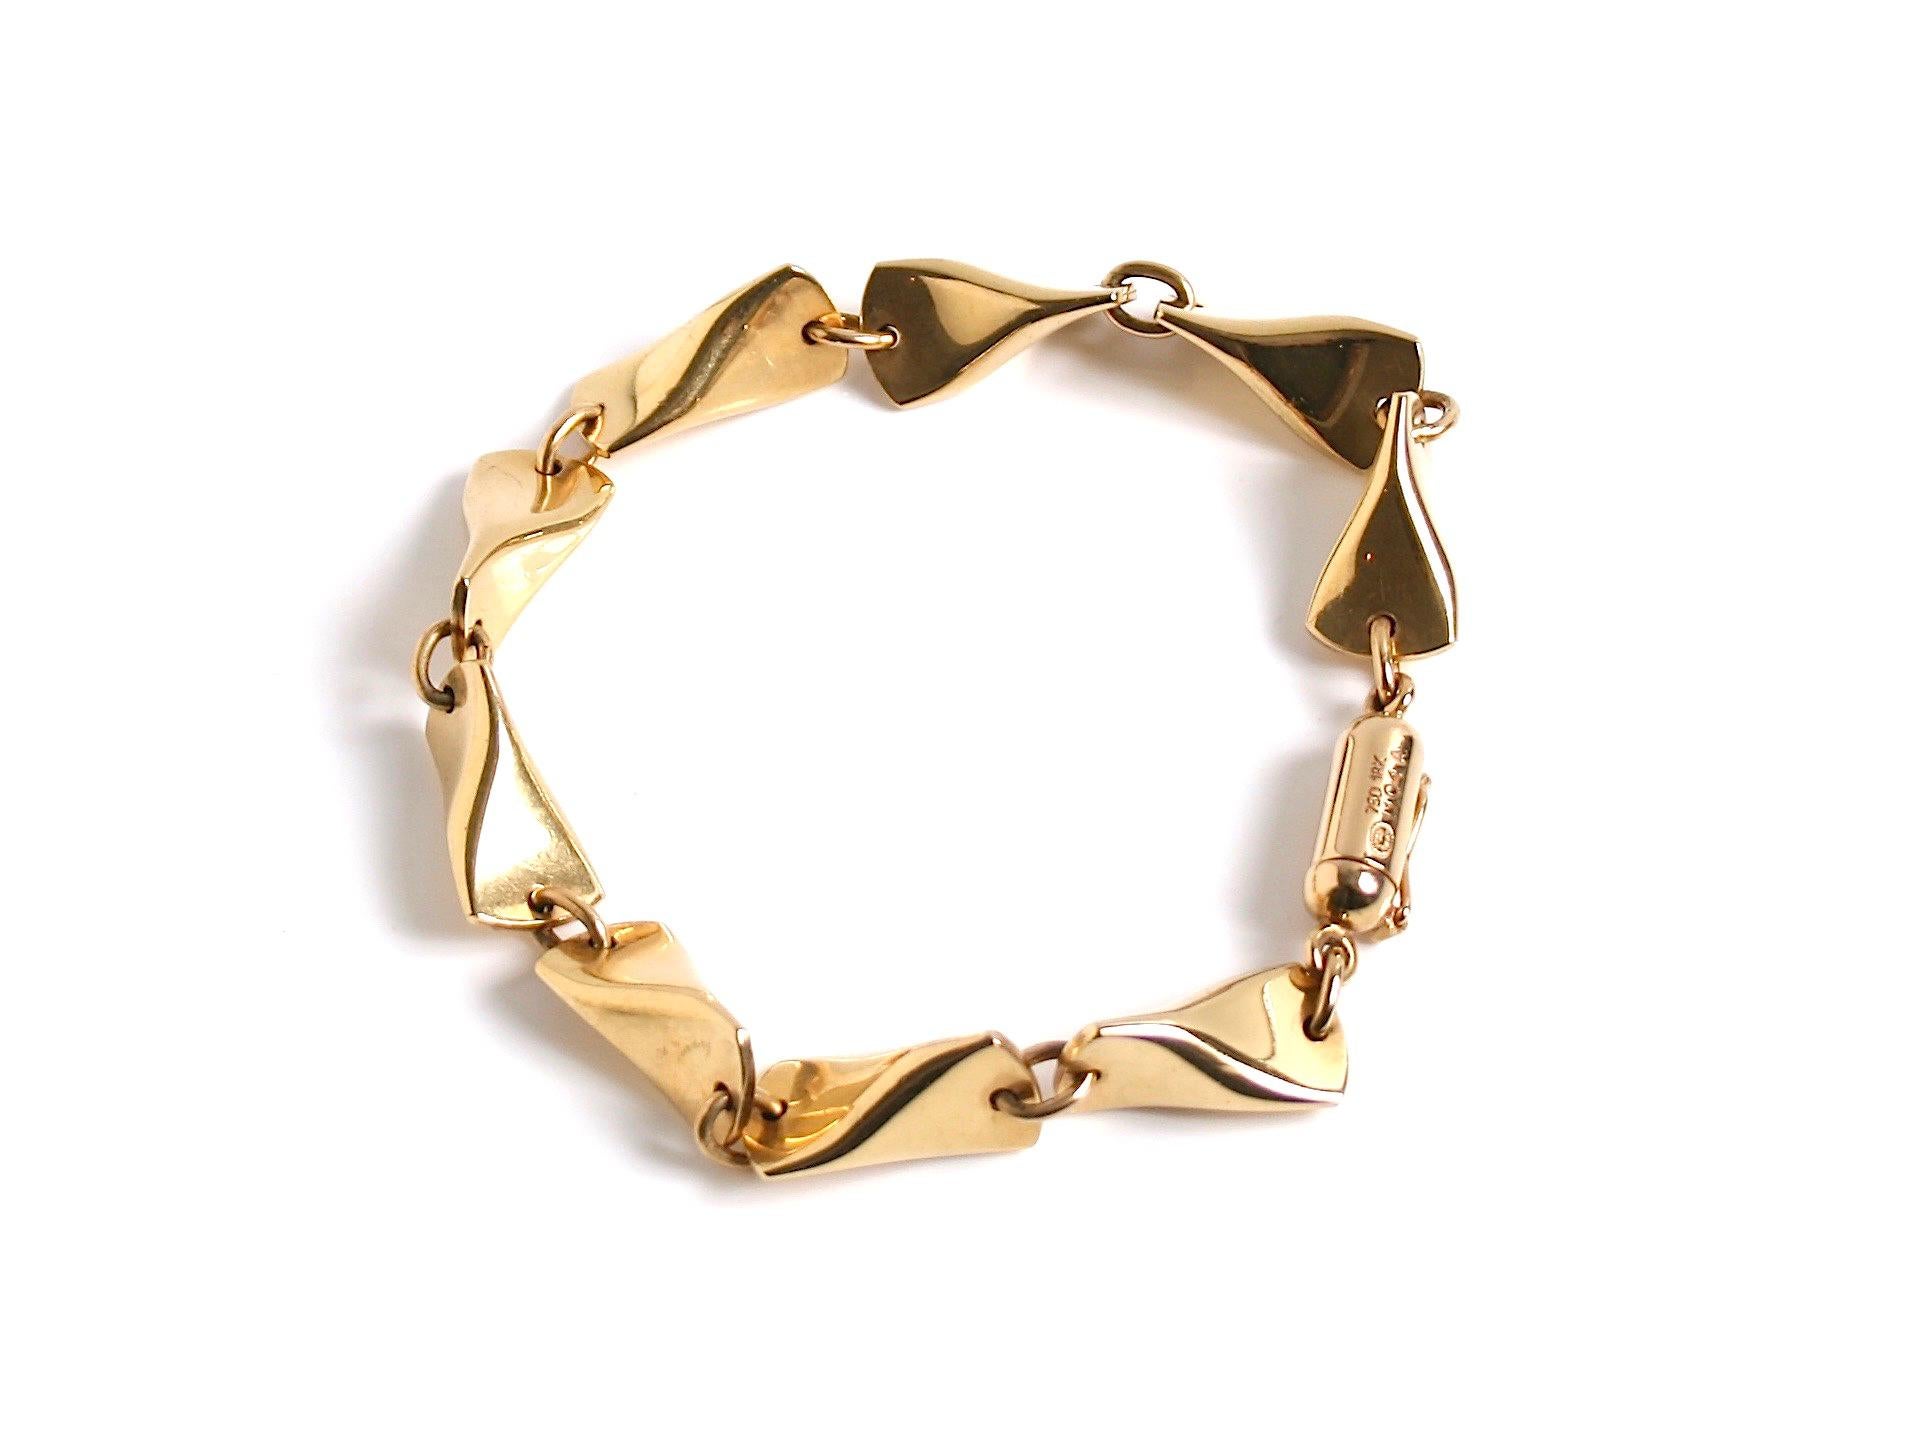  Georg Jensen 18 carat gold butterfly bracelet designed by Edvard Kindt Larsen  In Good Condition For Sale In London, GB